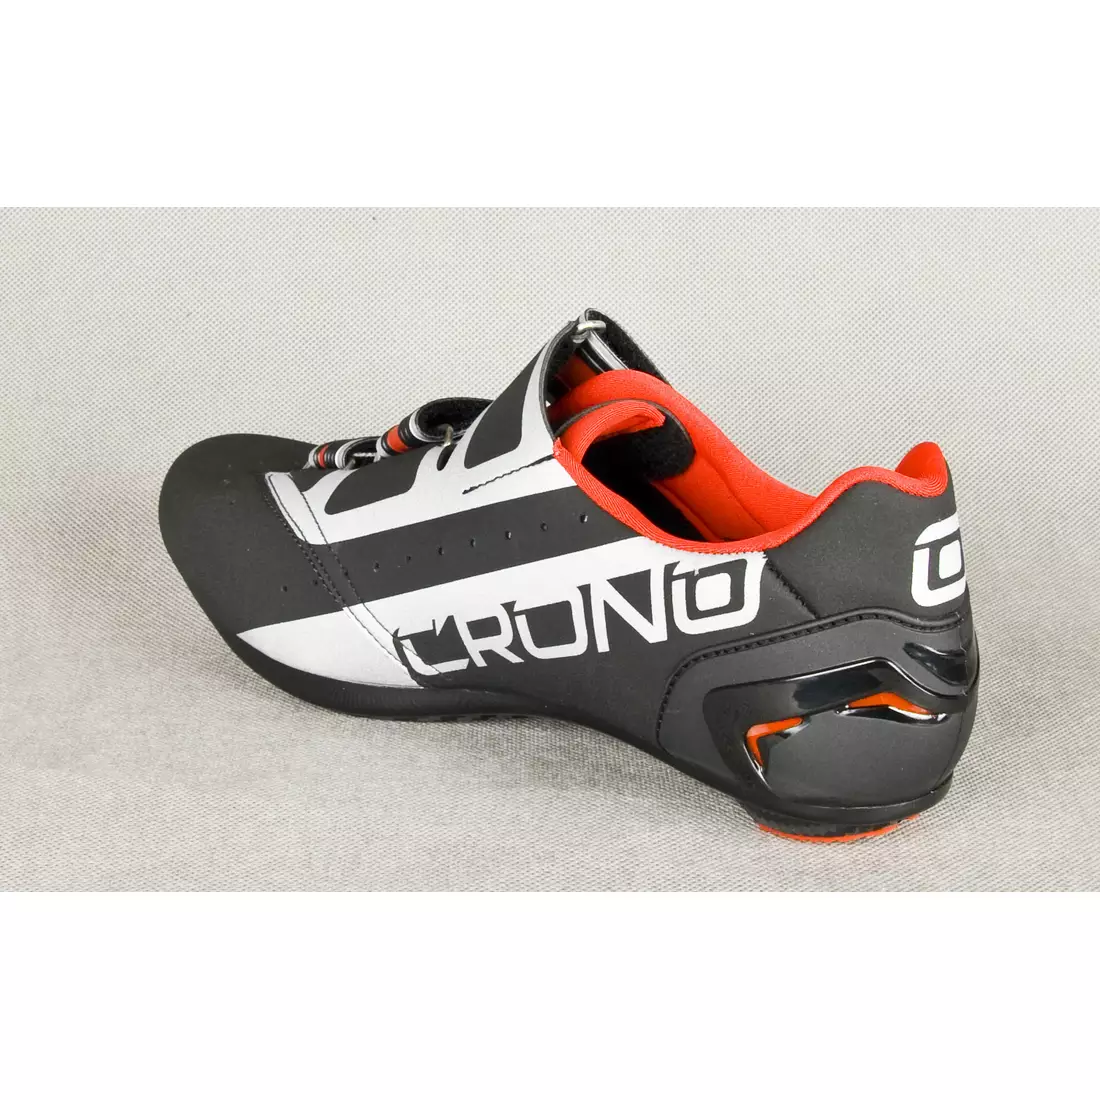 CRONO CR-4 NYLON road cycling shoes, black